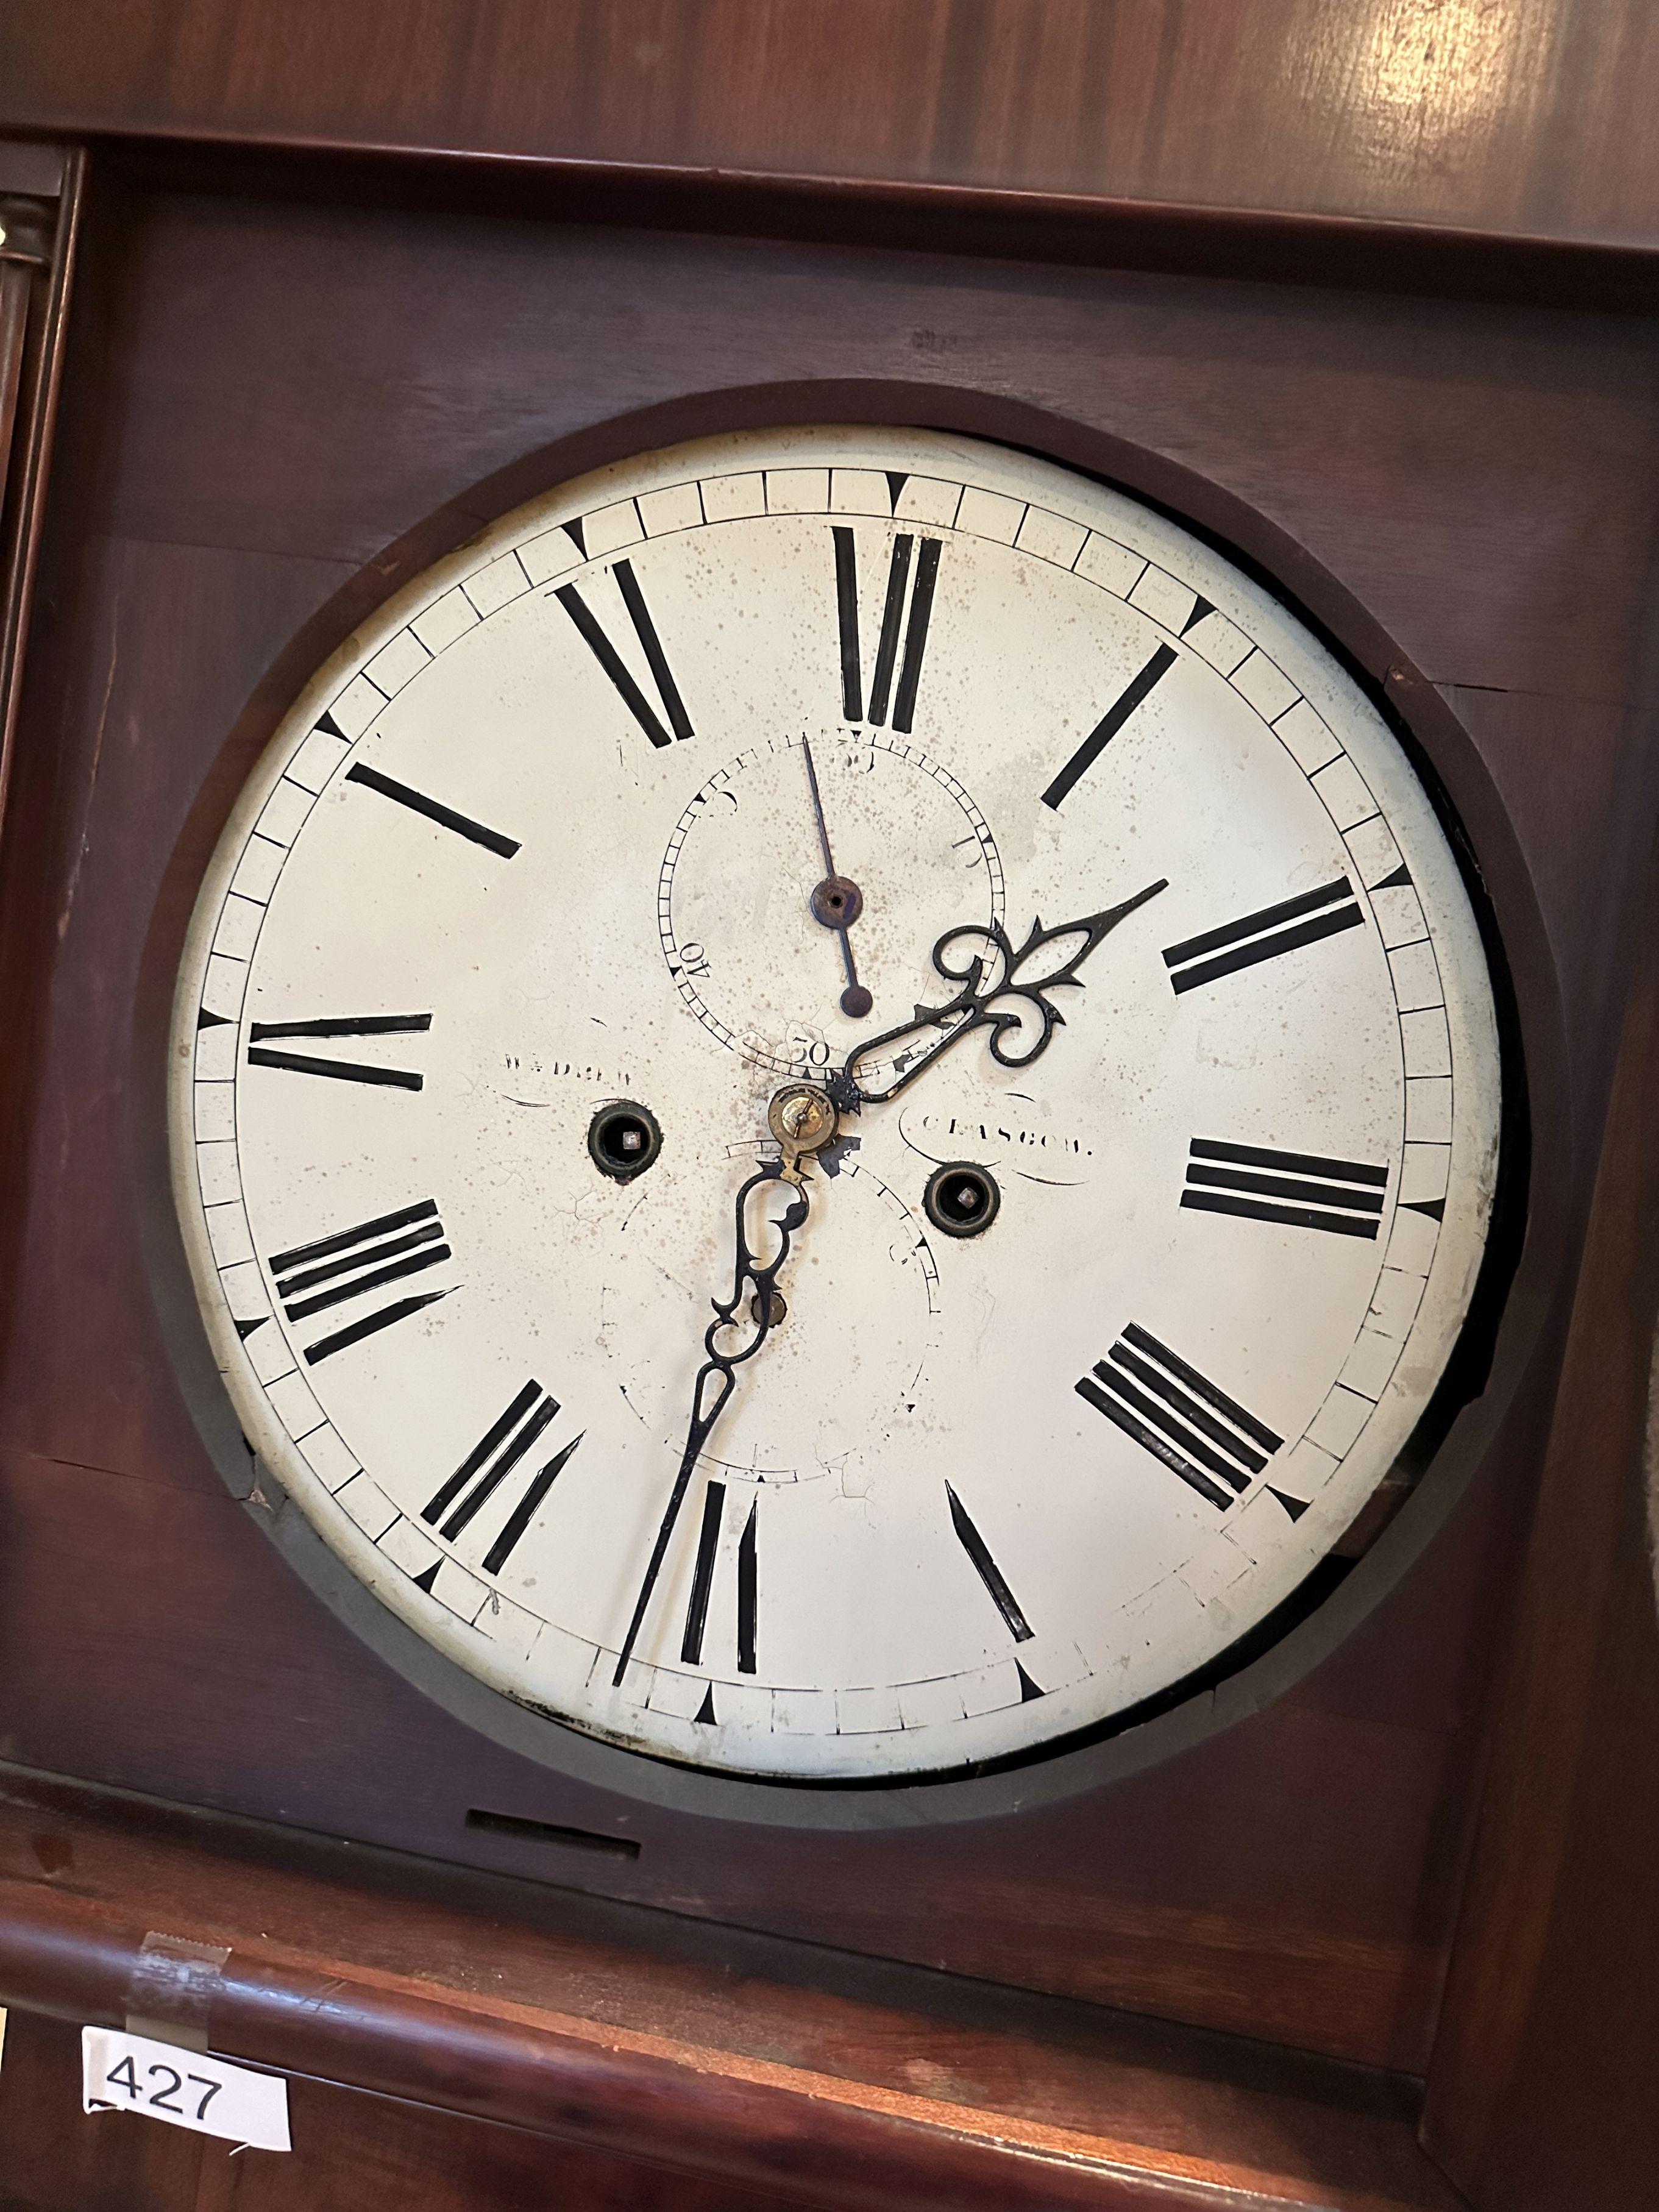 Antique Mahogany Scottish Grandfather Clock/Round Enamel Diel, Wm. Drew, Glasgow (Local Pick Up Only